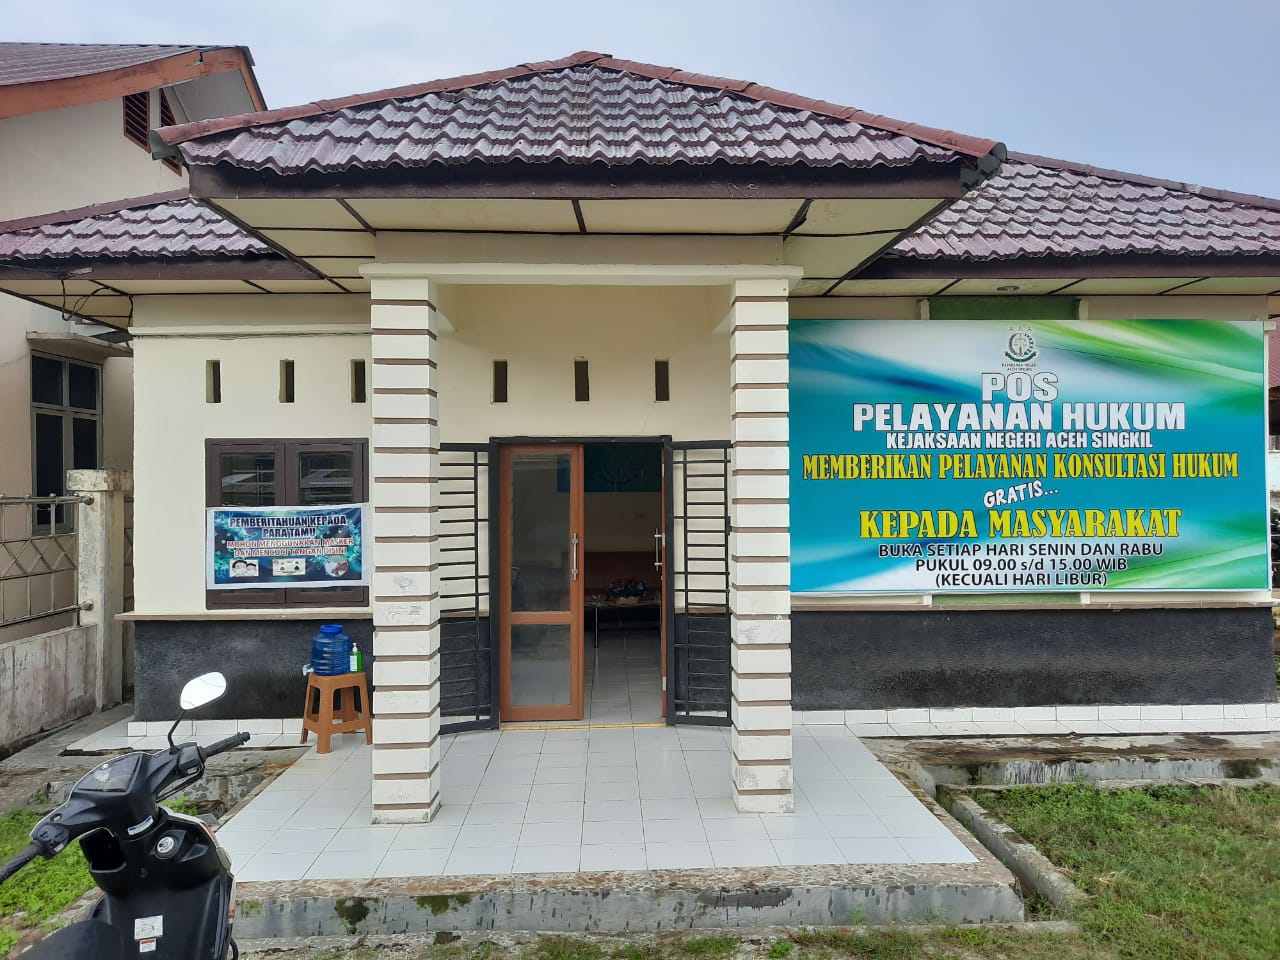 Kejaksaan Negeri Aceh Singkil Photo